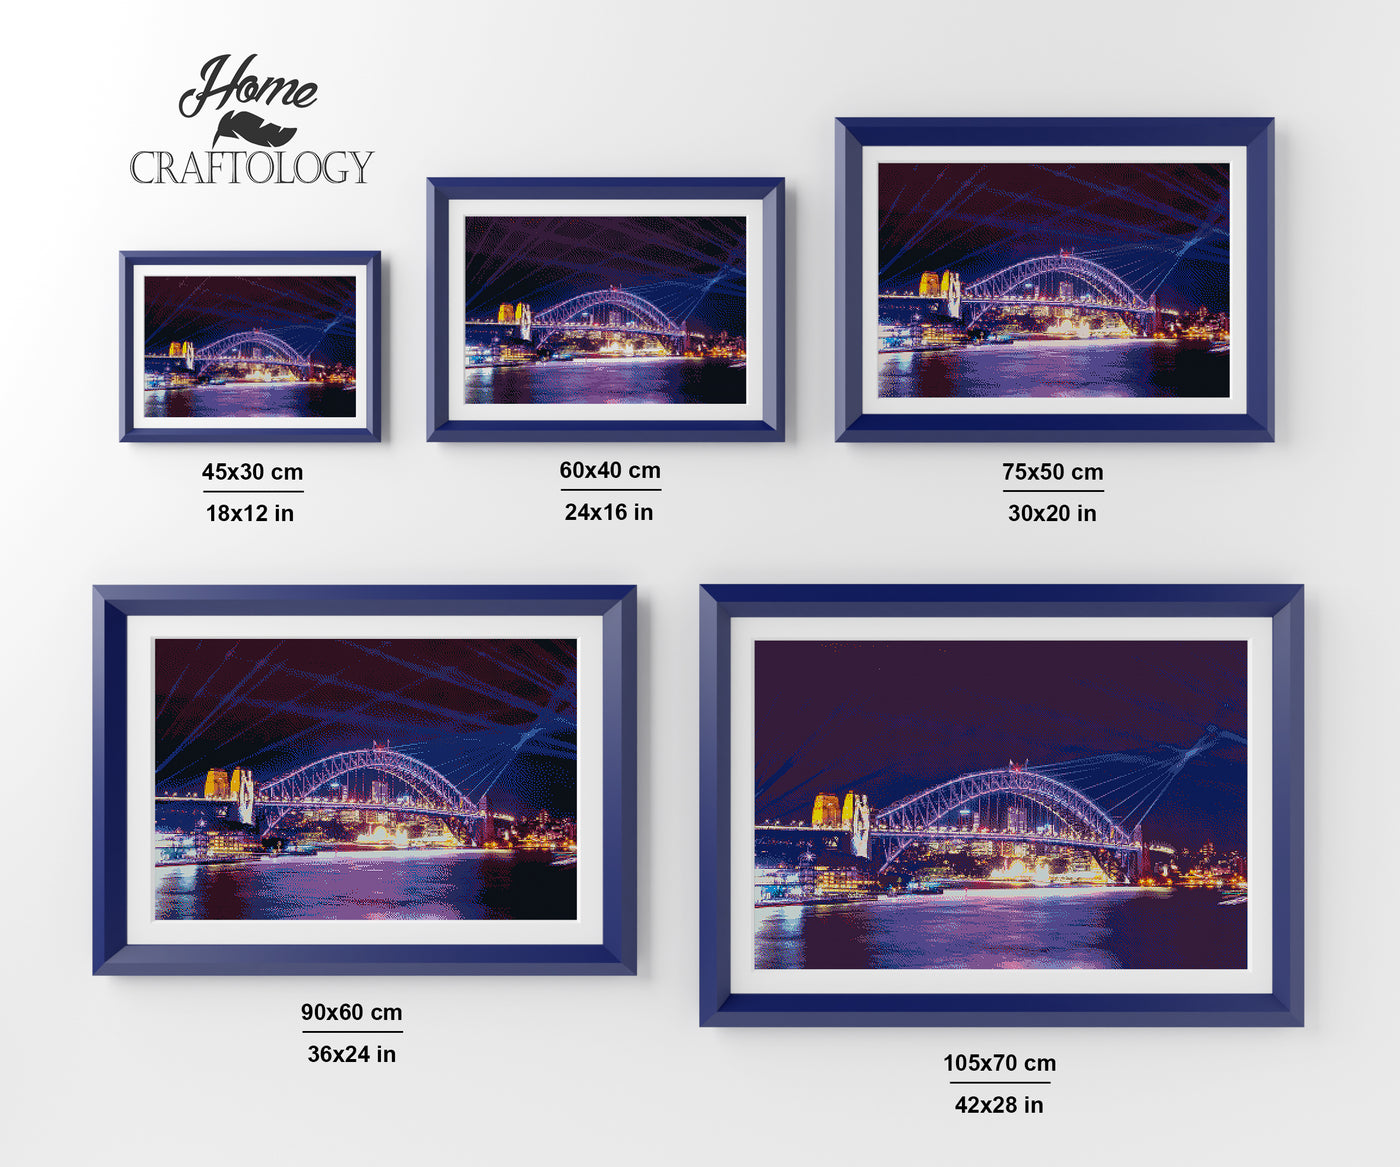 Sydney Bridge at Night - Premium Diamond Painting Kit